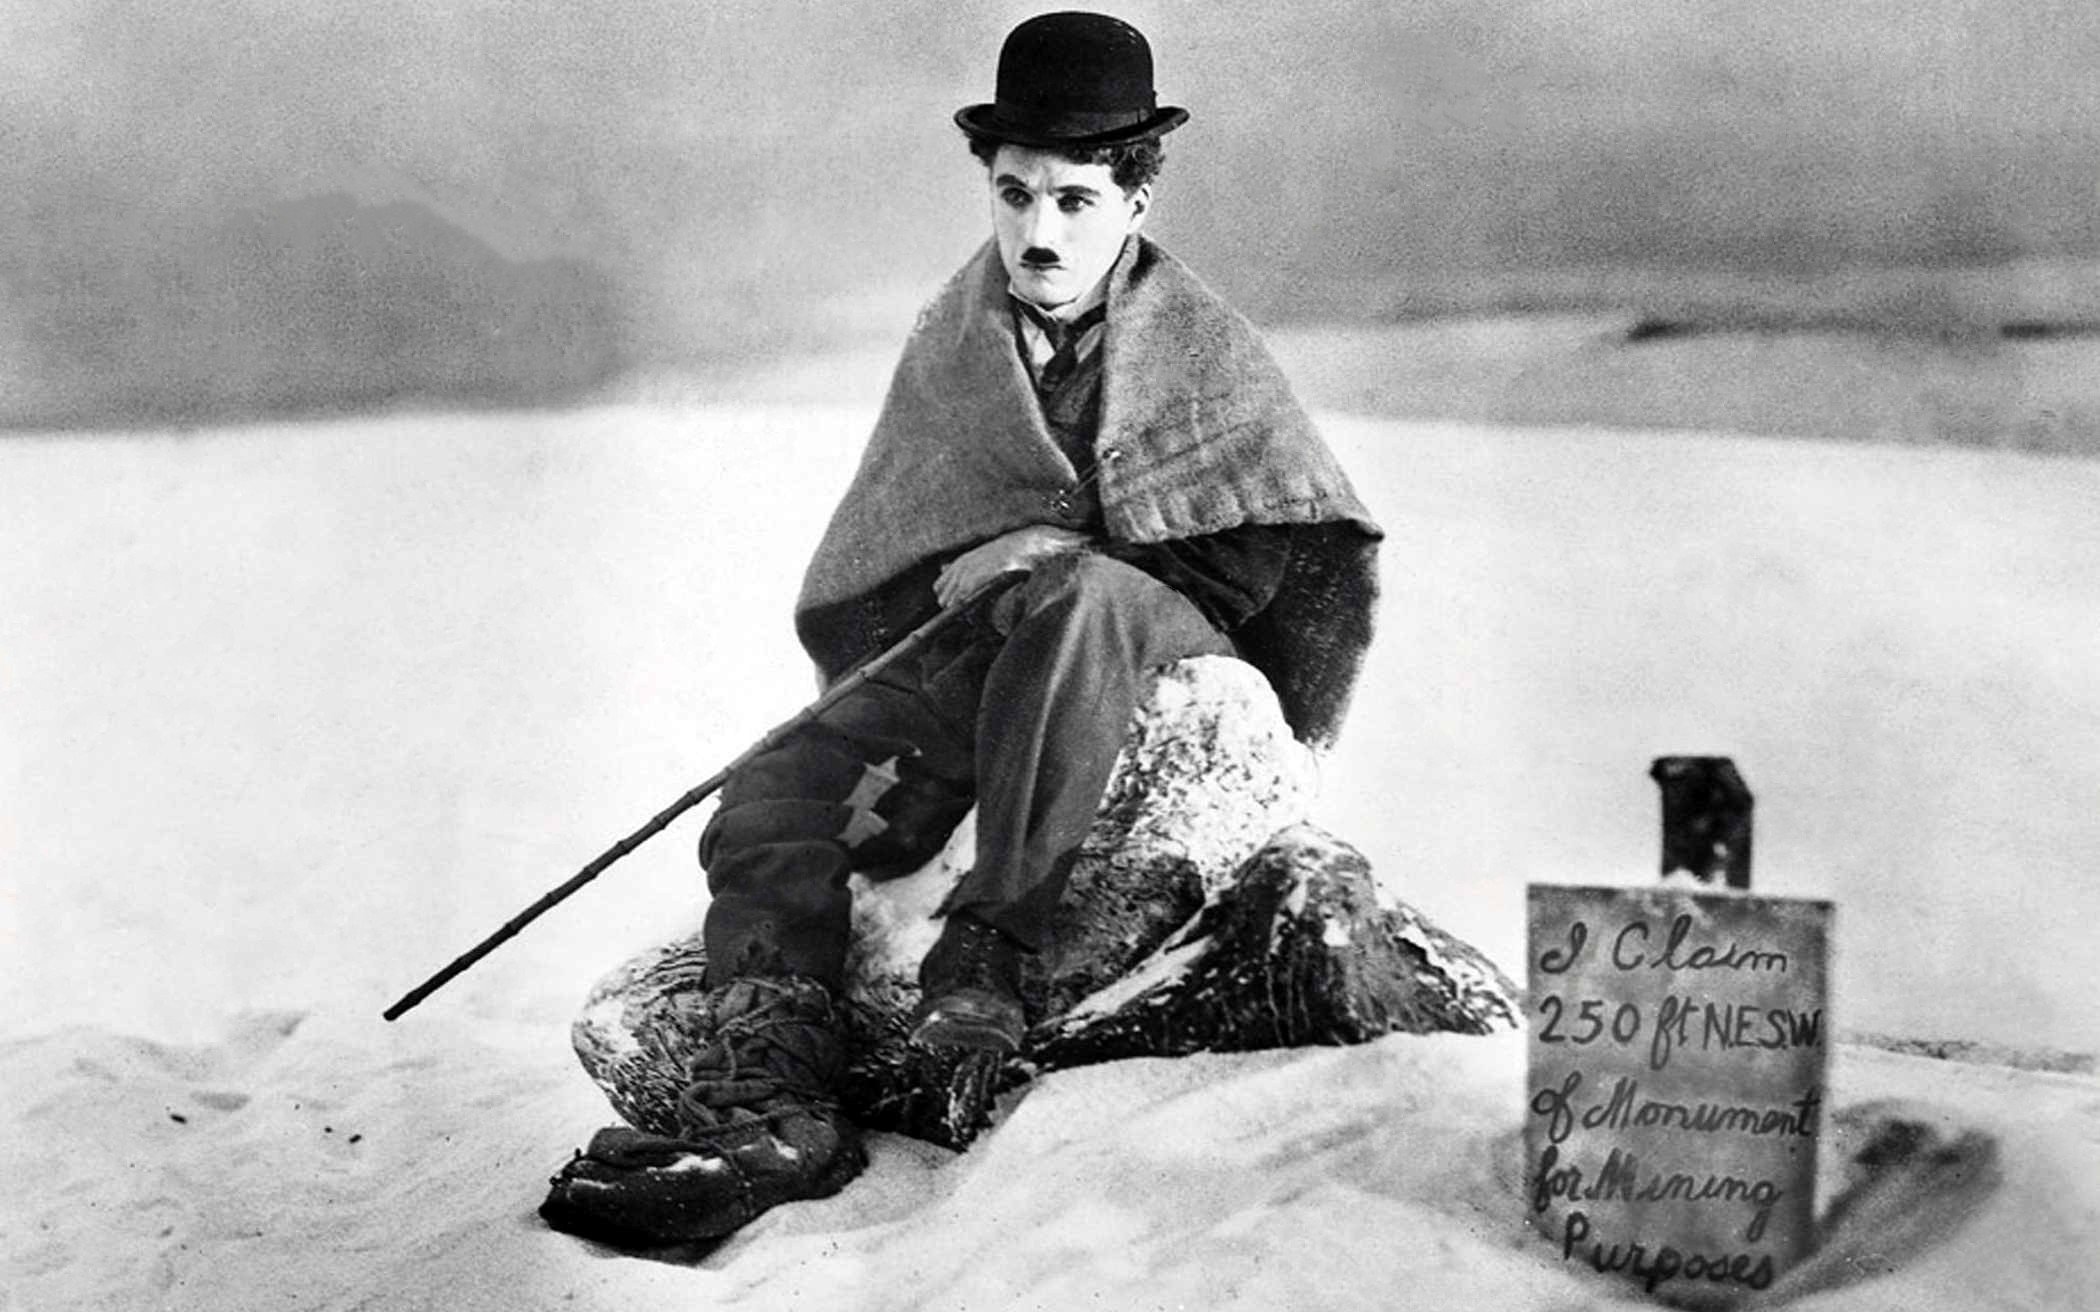 Wallpaper : Charlie Chaplin, actor, smile, ART 3148x1923 - wallhaven -  992623 - HD Wallpapers - WallHere